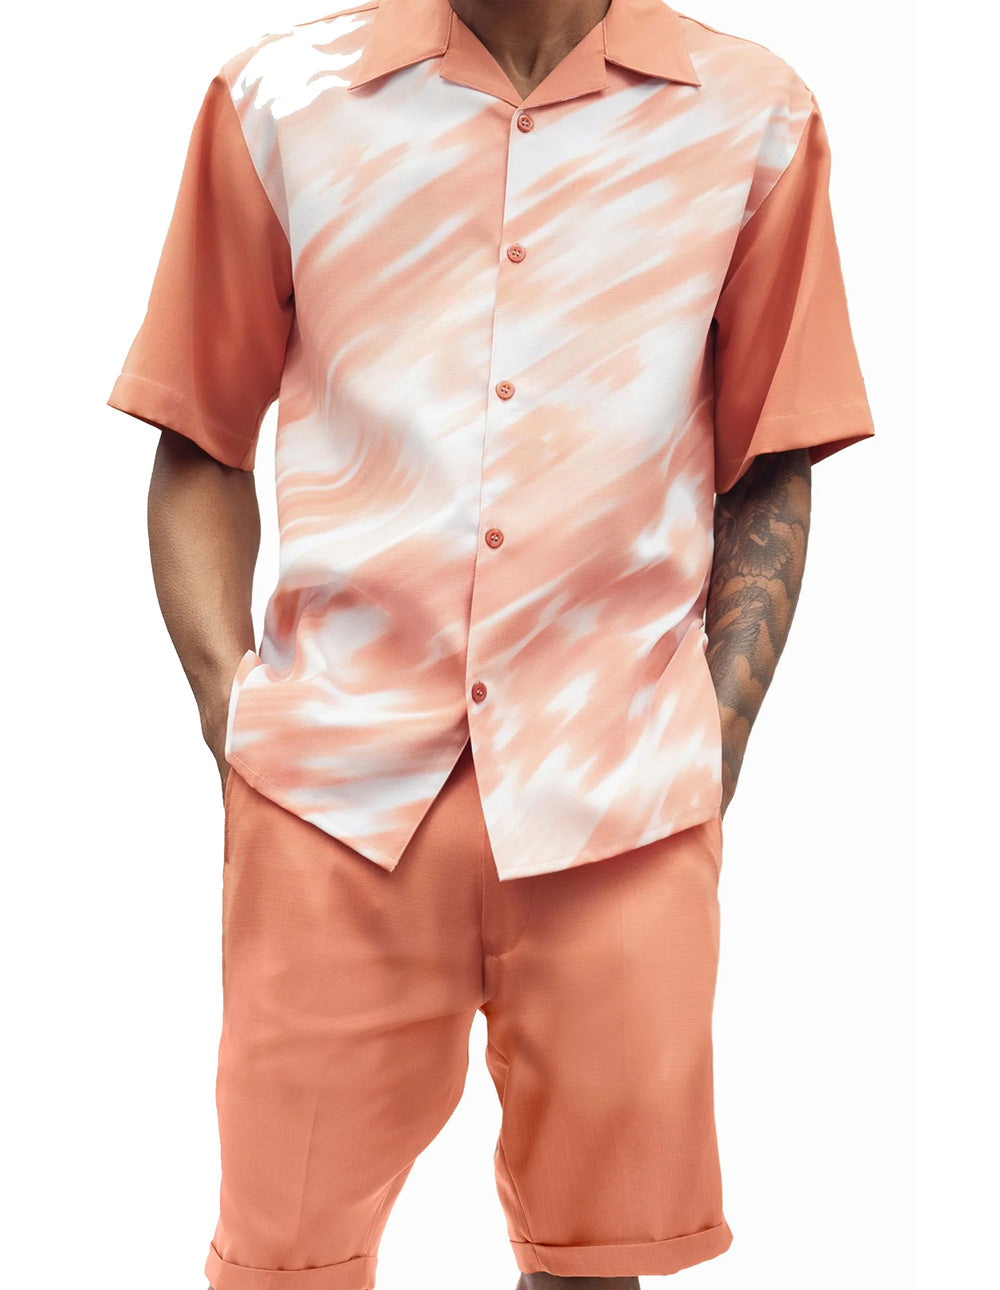 Apricot Print Design Walking Suit 2 Piece Set Short Sleeve Shirt with Shorts